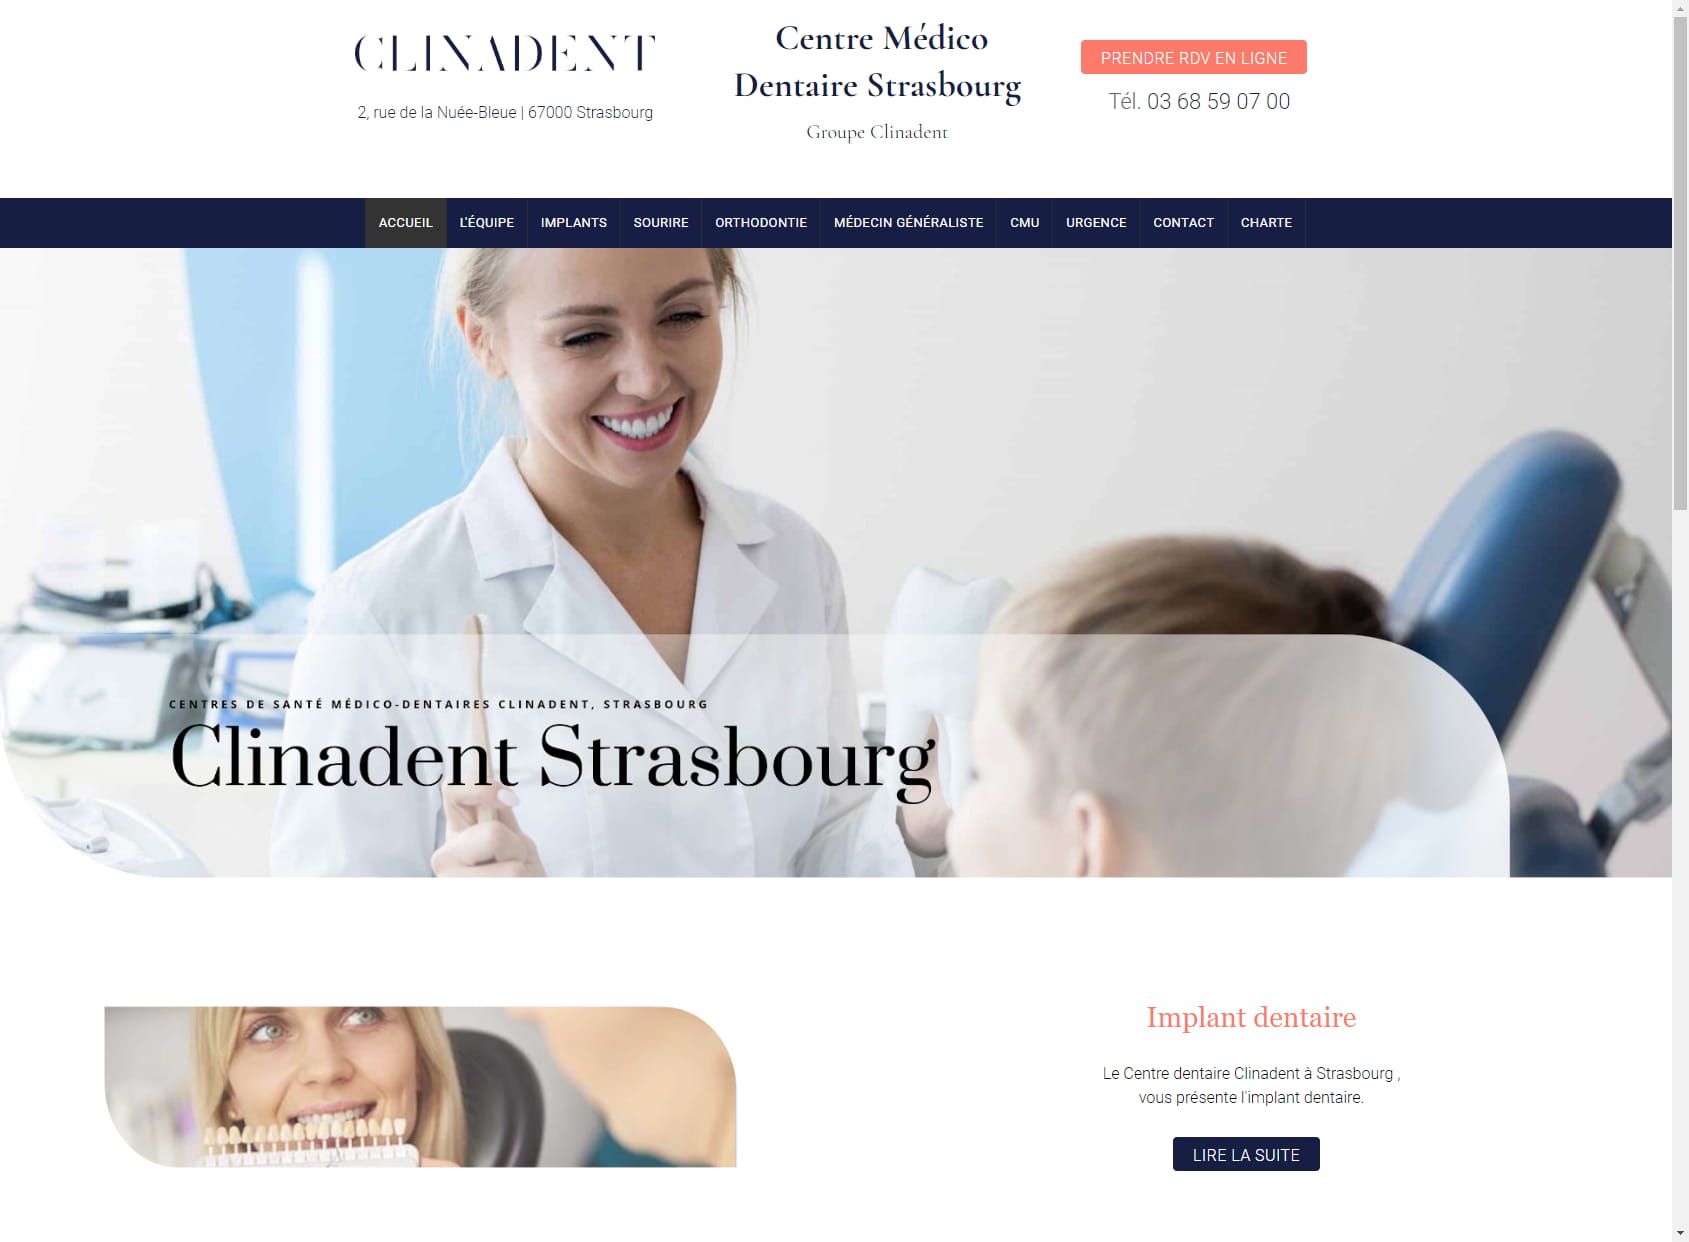 Clinadent - Centre Médico-Dentaire, Strasbourg La Nuée-Bleue